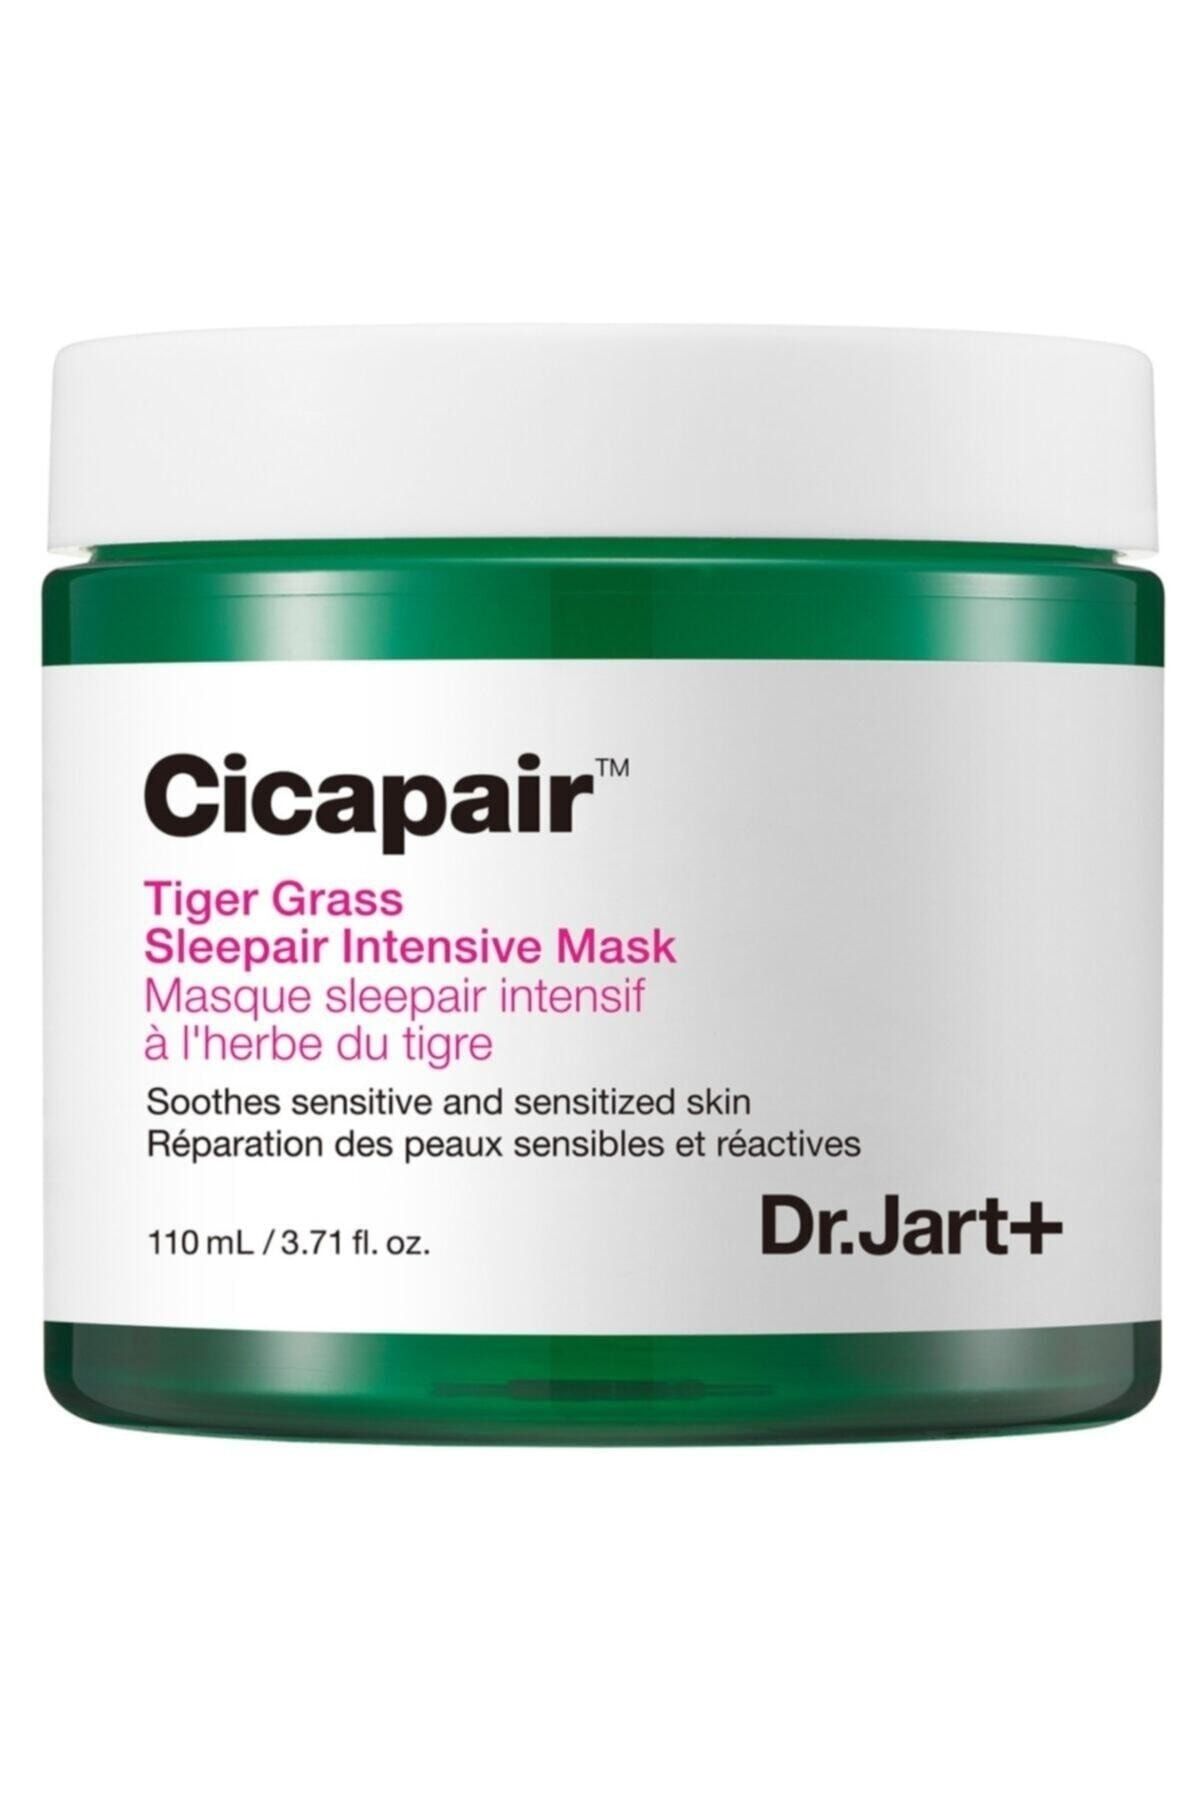 Dr. Jart+ Dr.jart+ Cicapair Tiger Grass Sleepair Intensive Mask Onarıcı Maske 110 Ml Shoppng Fashions 1